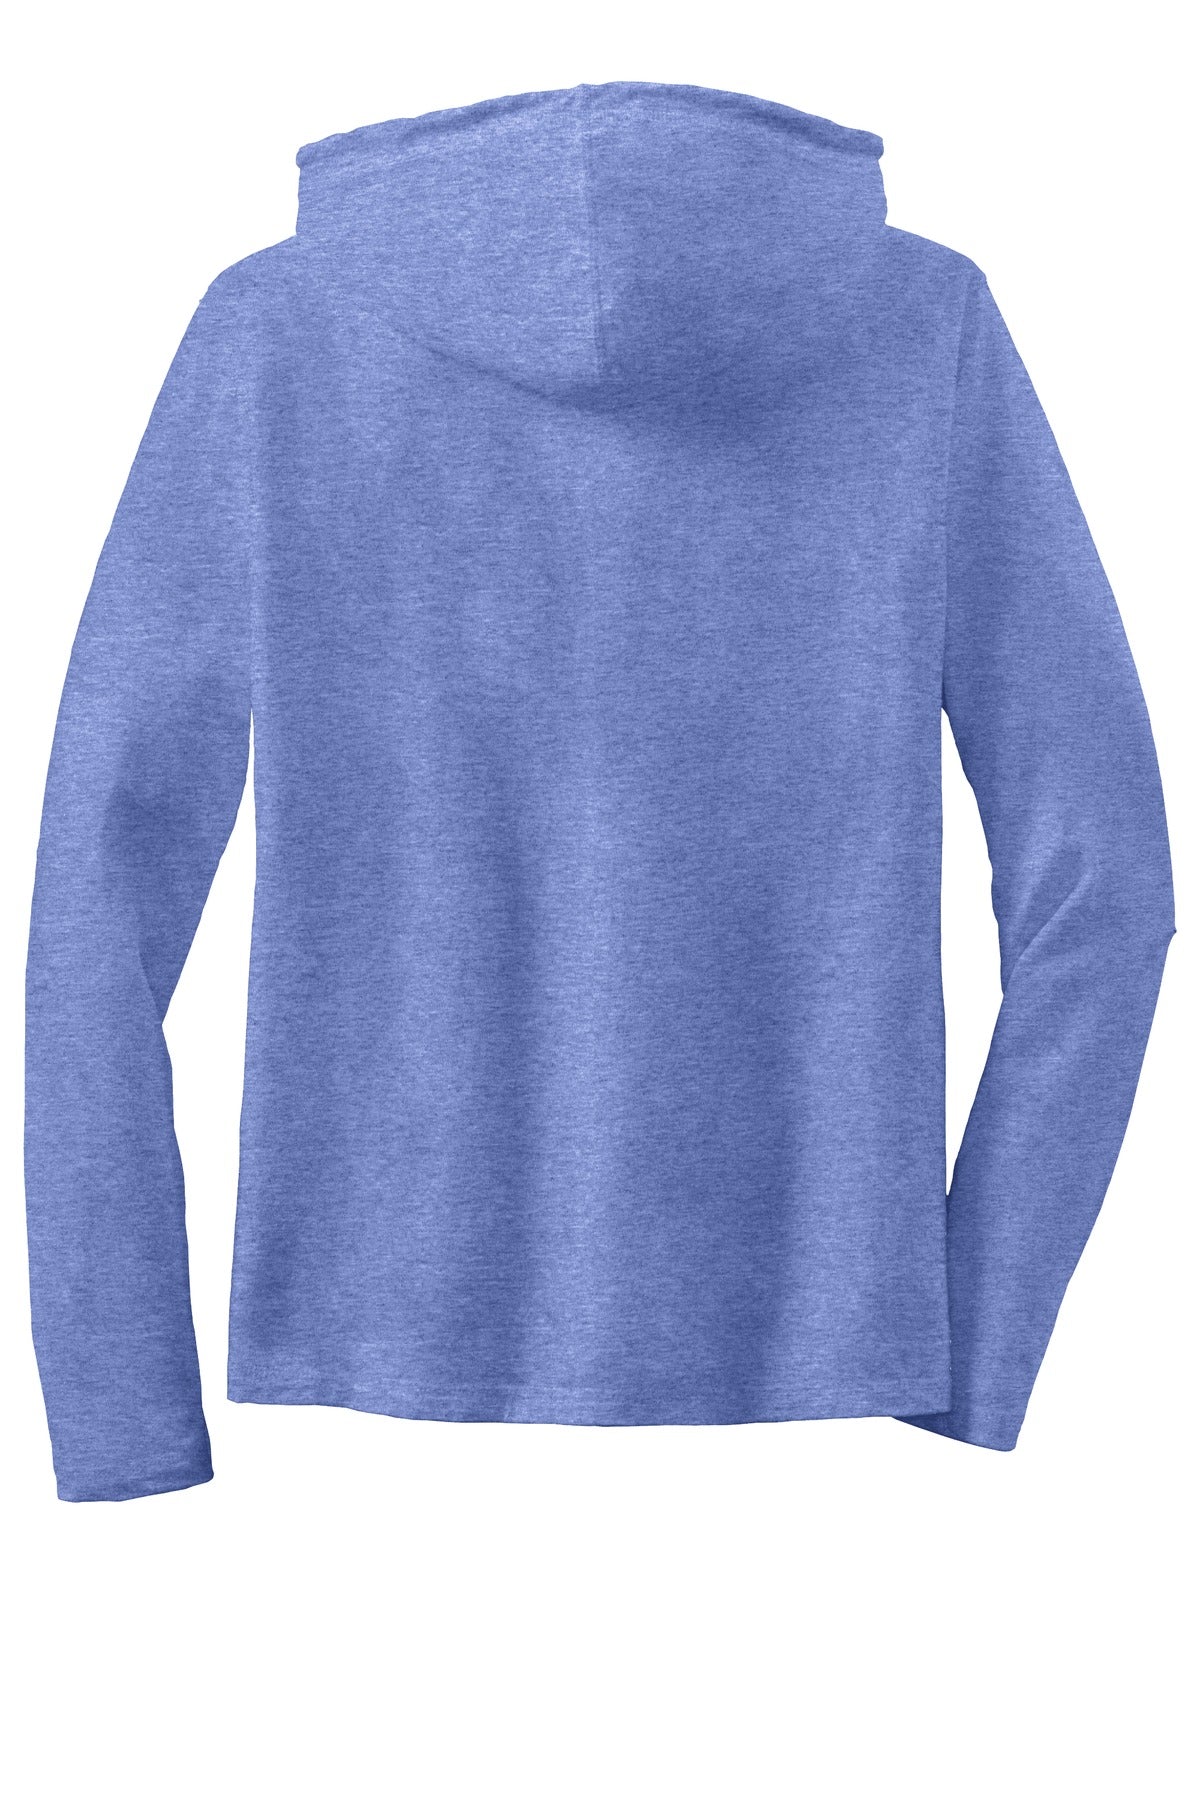 Gildan Ladies 100% Combed Ring Spun Cotton Long Sleeve Hooded T-Shirt. 887L